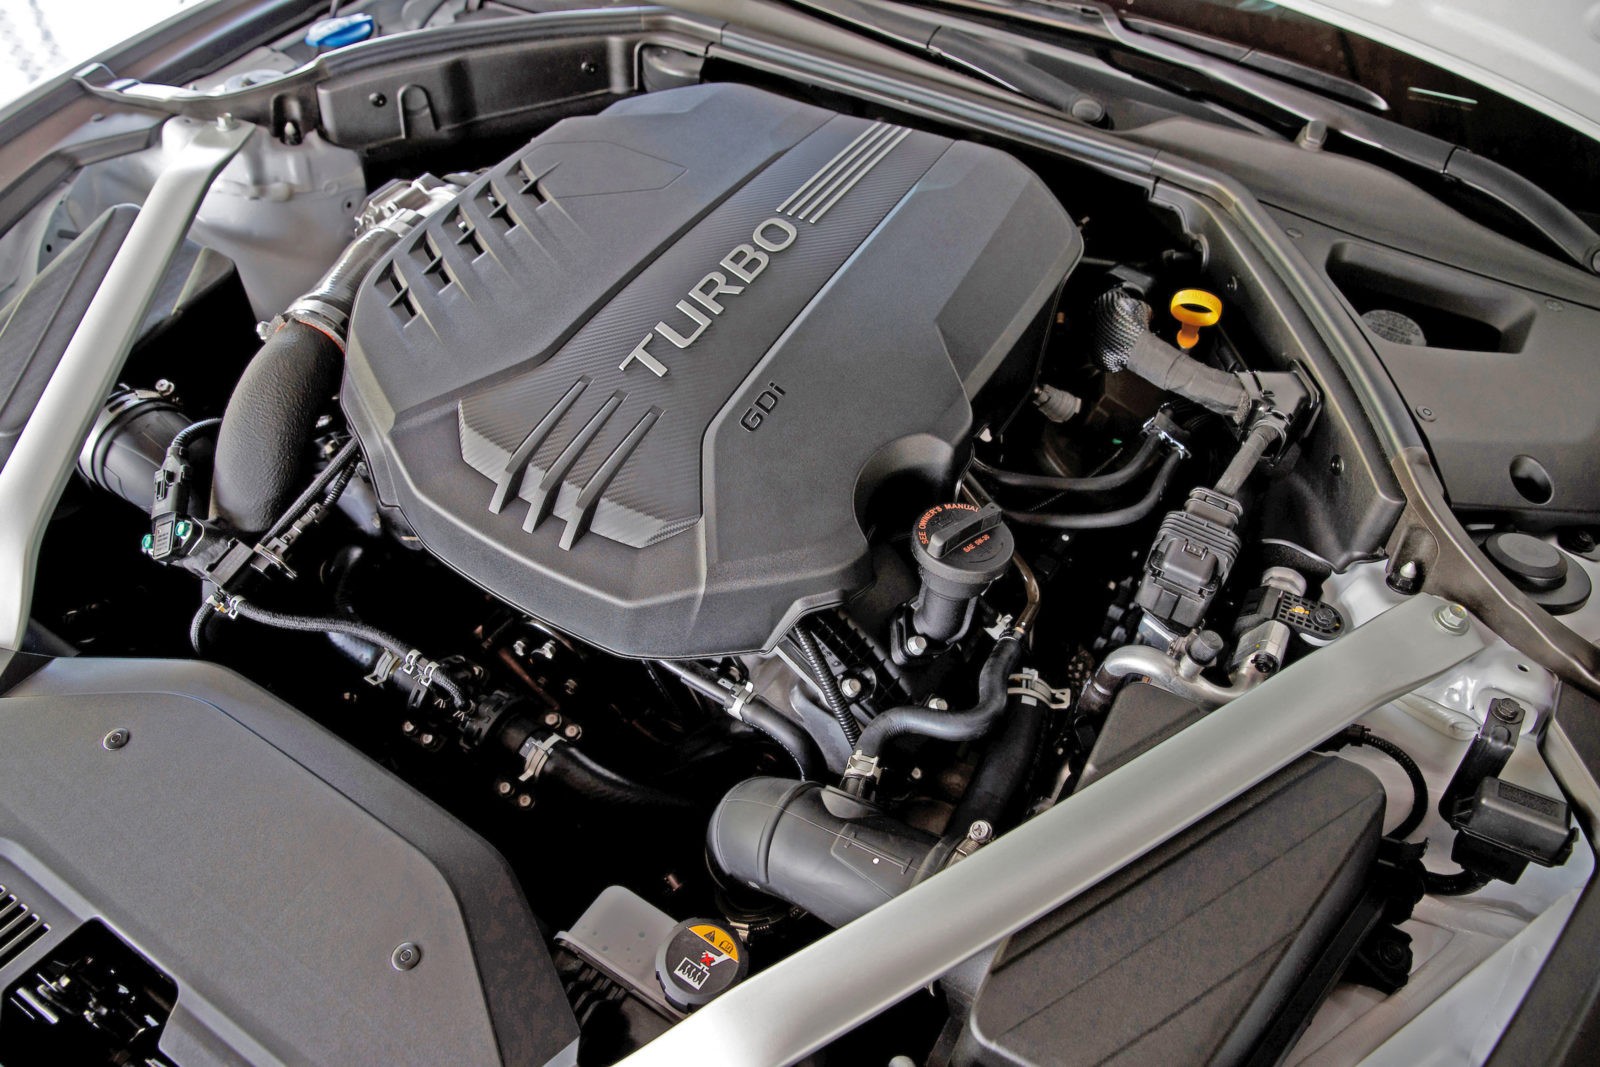 Genesis G70 3.3 Turbo RWD Review | Napleton News